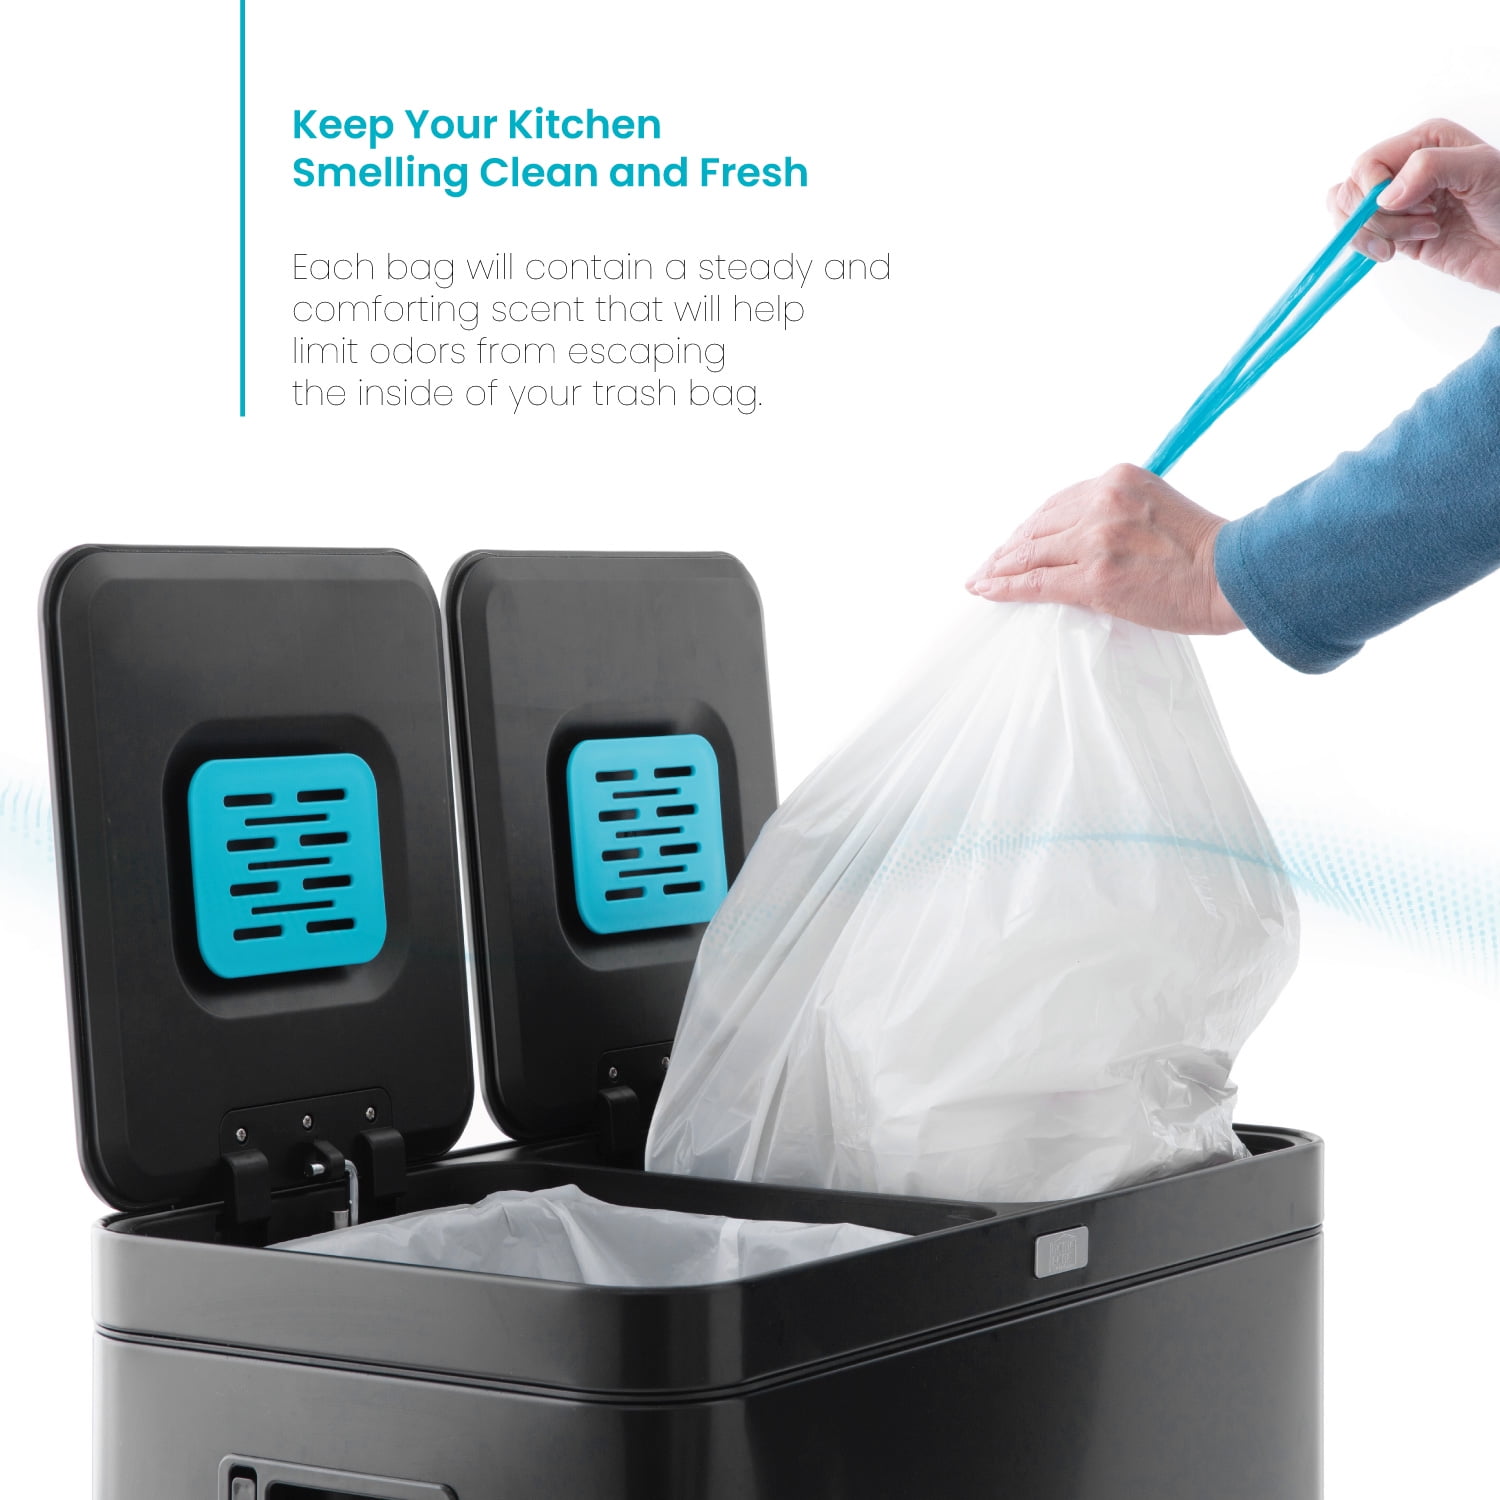 12 Gallon Kitchen Trash Bags with Drawstring Handles, Heavy Duty Custo —  Home Zone Living